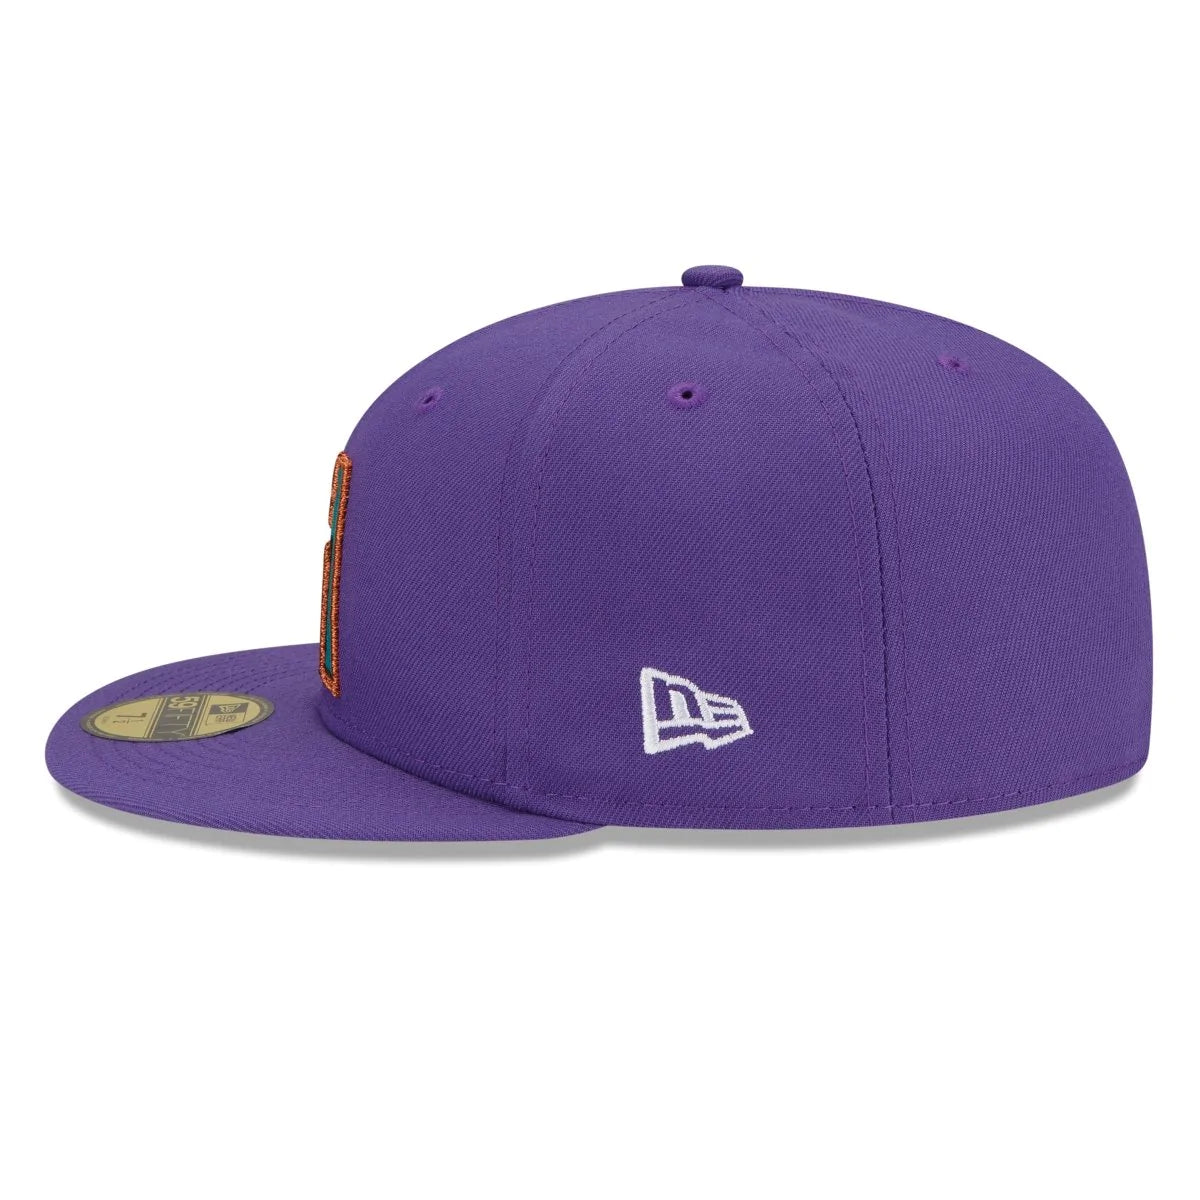 Men's Arizona Diamondbacks New Era Purple 2001 World Series 59FIFTY Fitted Hat